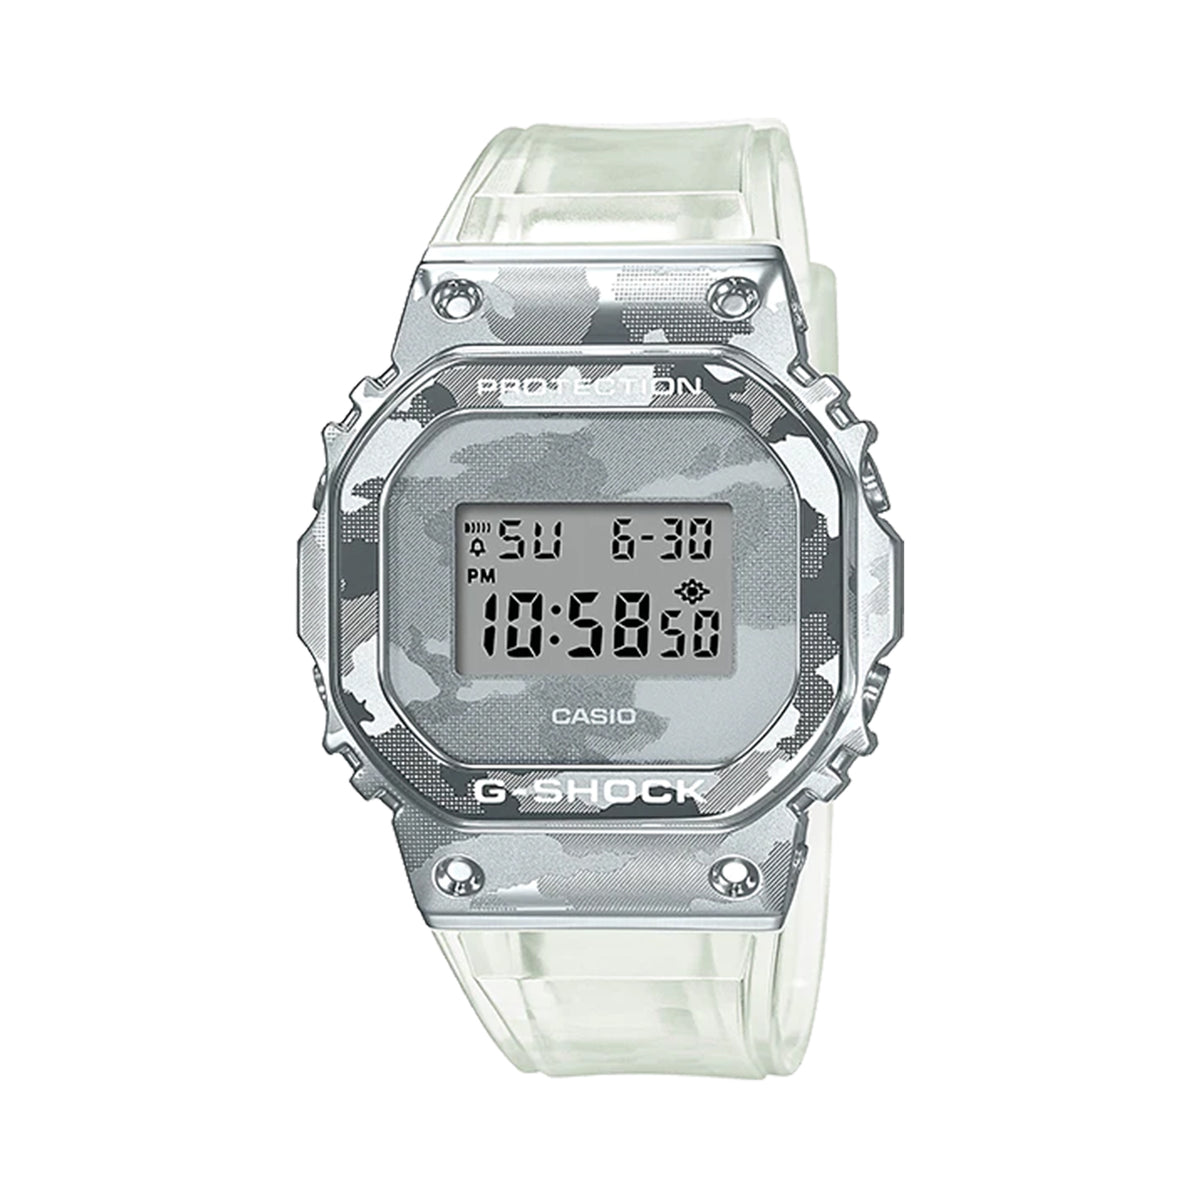 Casio G-SHOCK Men's Digital Watch GM5600SCM-1